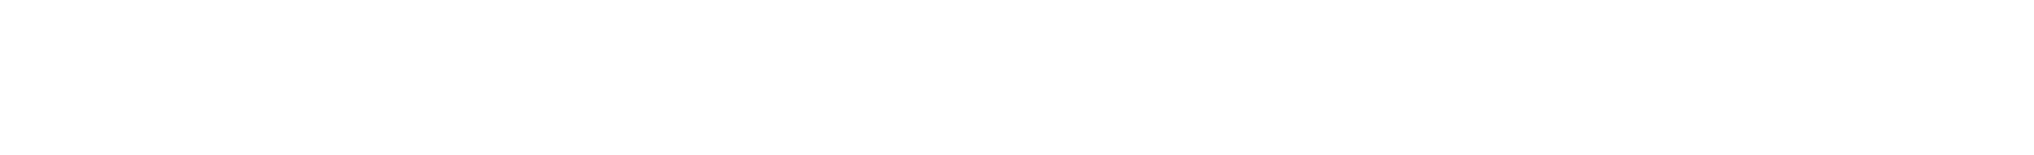 criminal lawyer in toronto social proof | Criminal Lawyer Toronto | Free Consultation